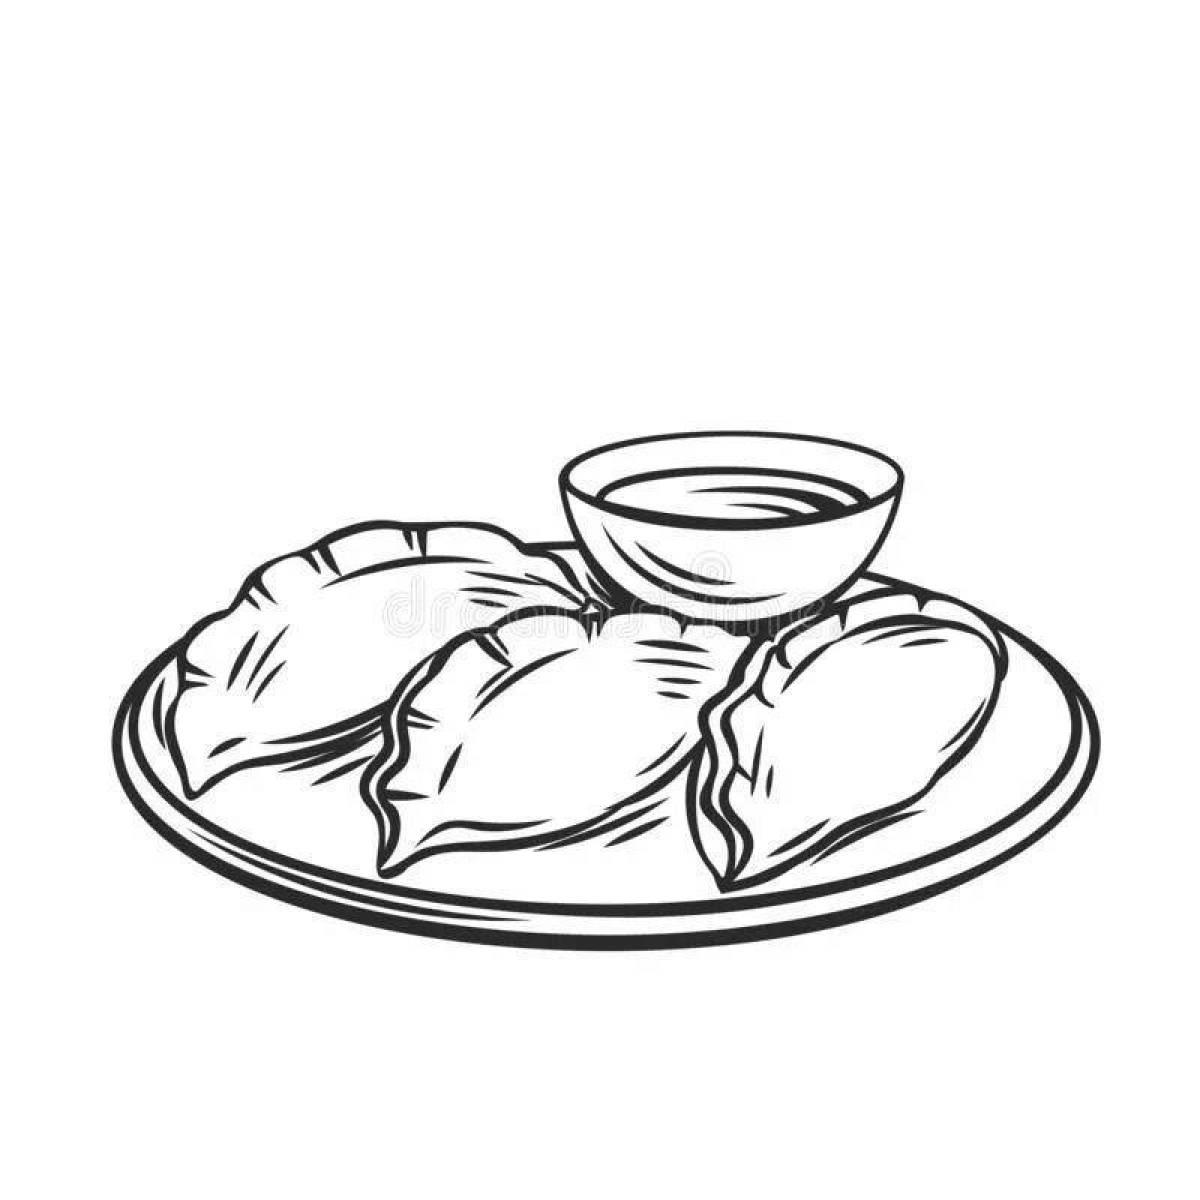 Savory dumplings coloring page